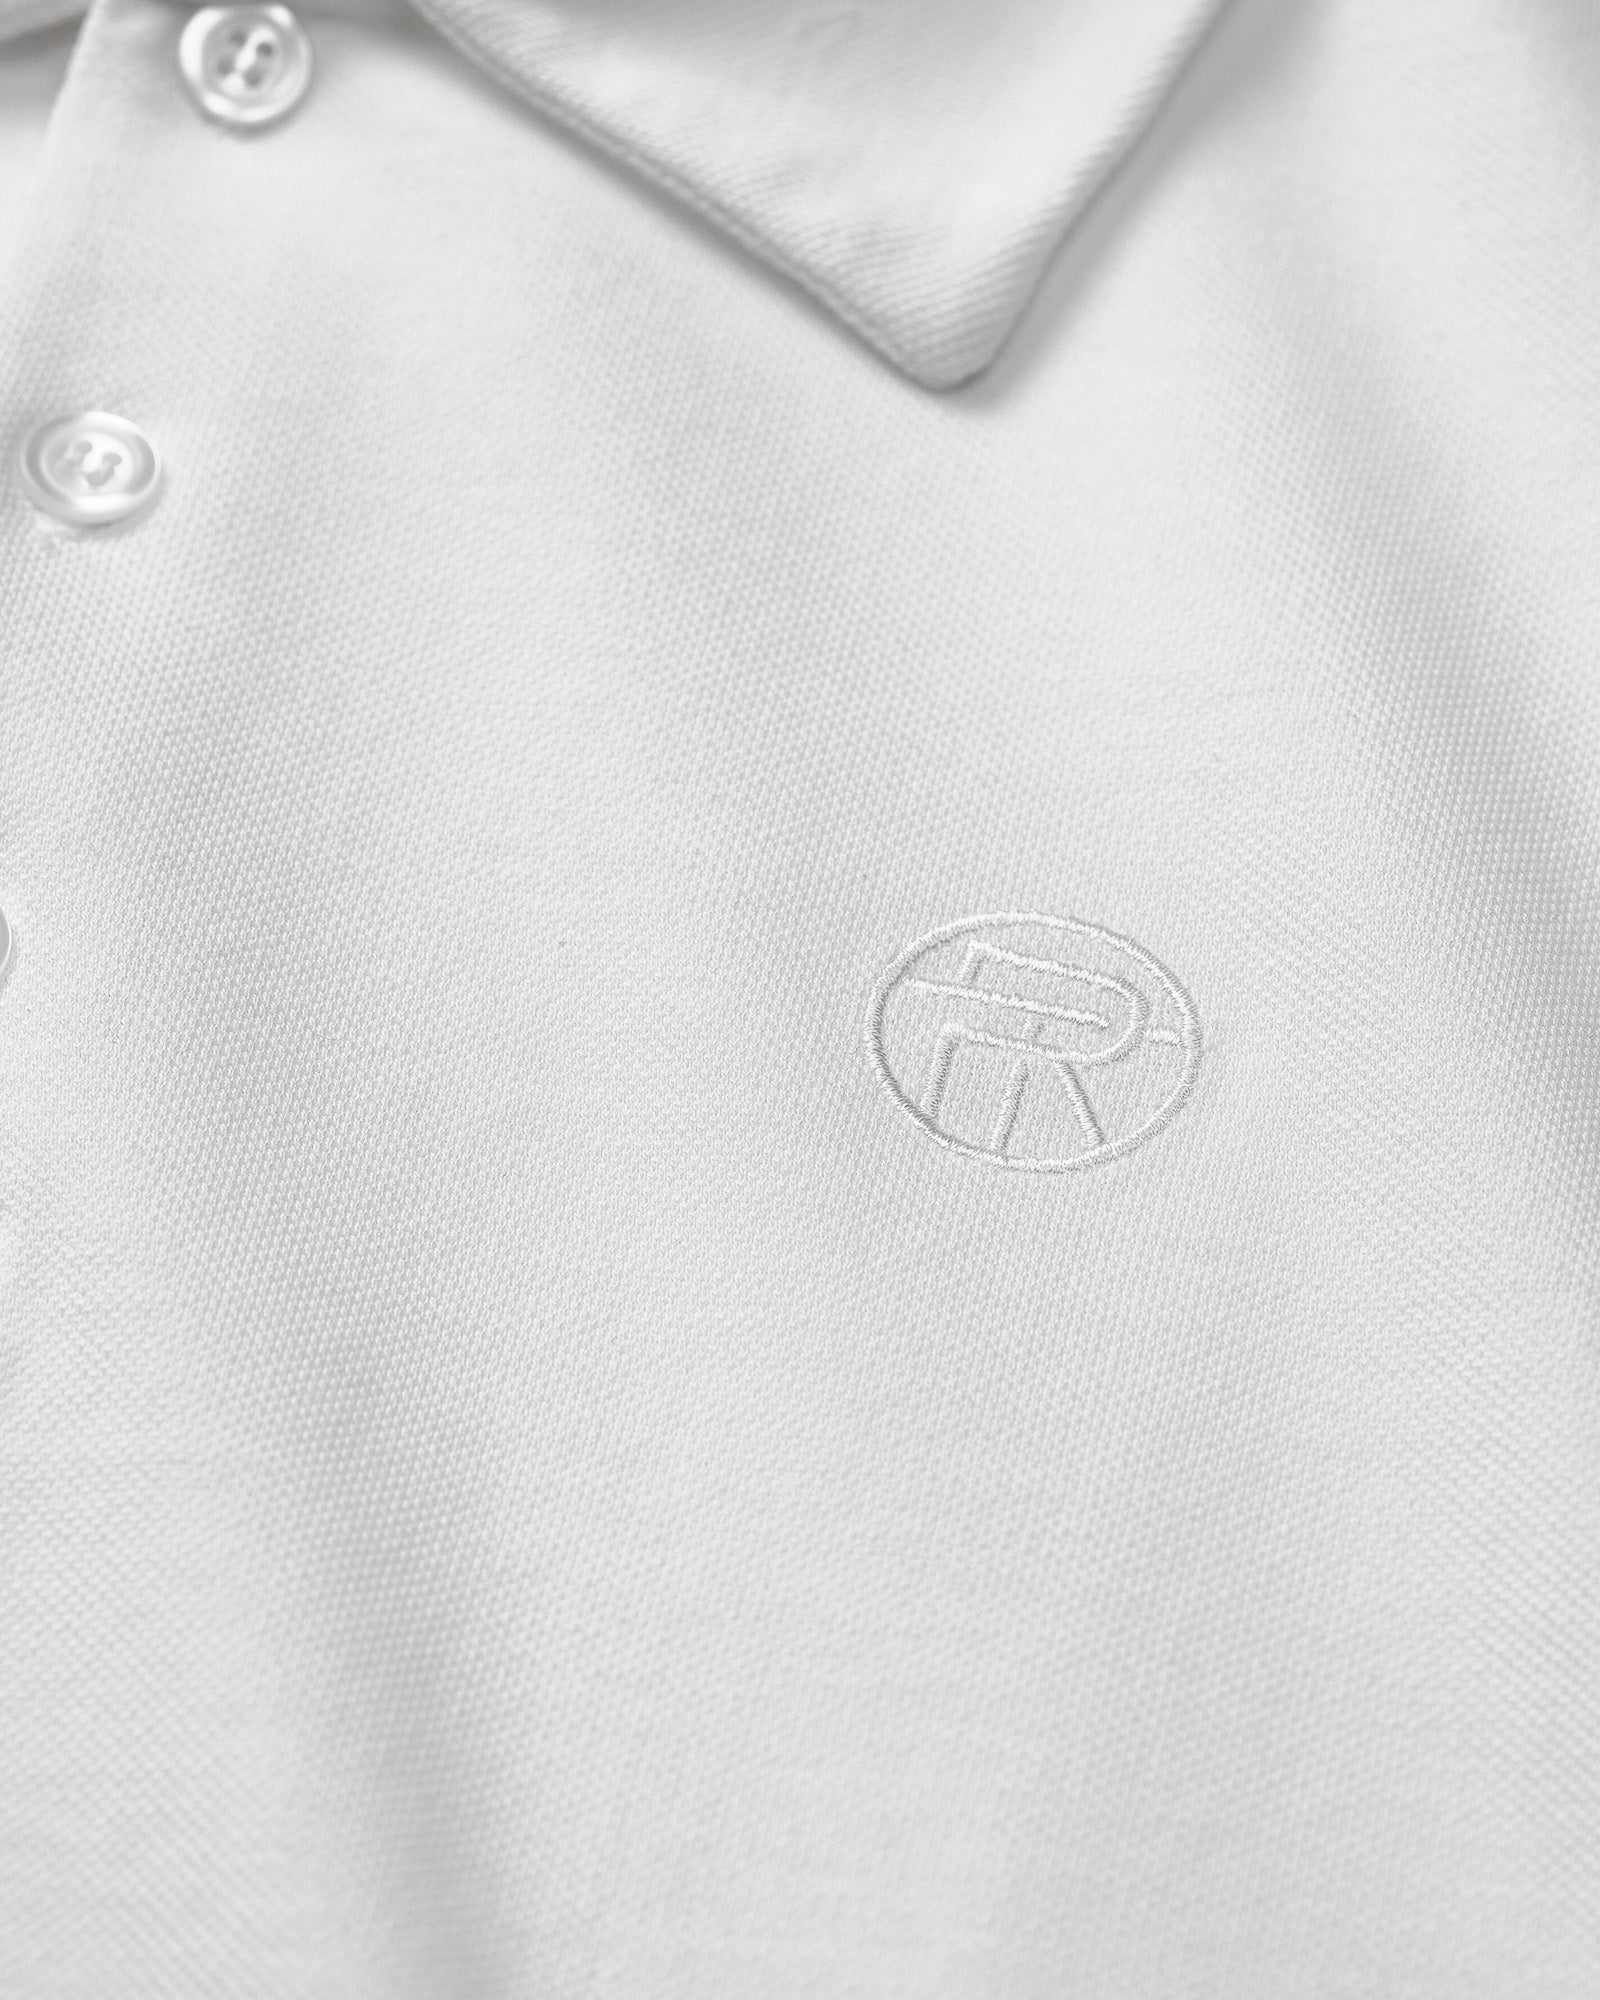 Piqué Polo Shirt Ivory - THE RESORT CO